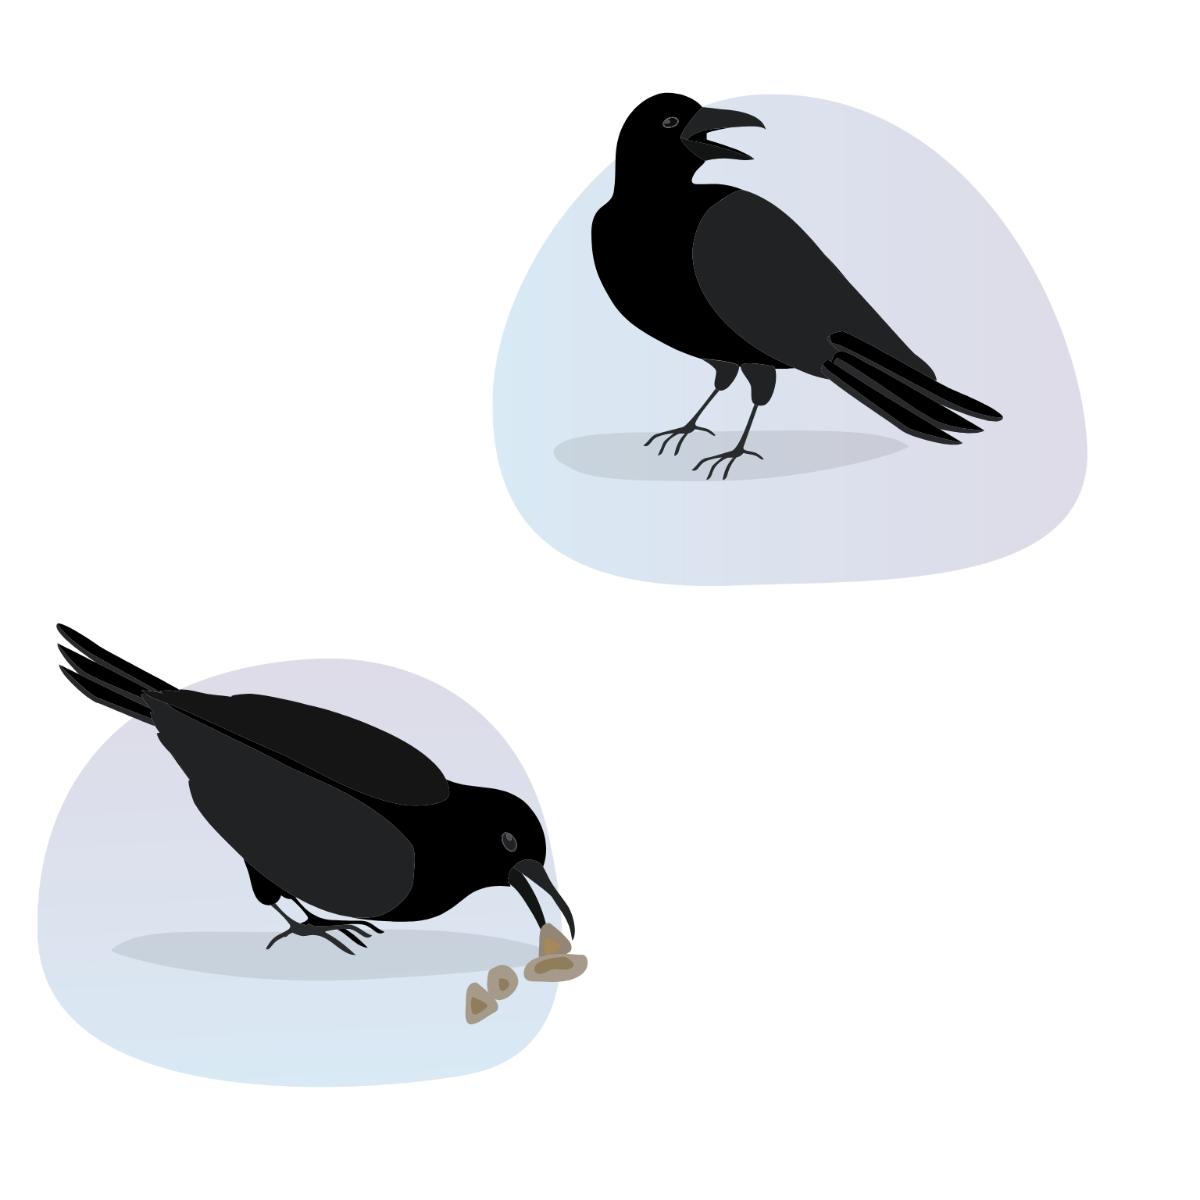 Crow Vector Template